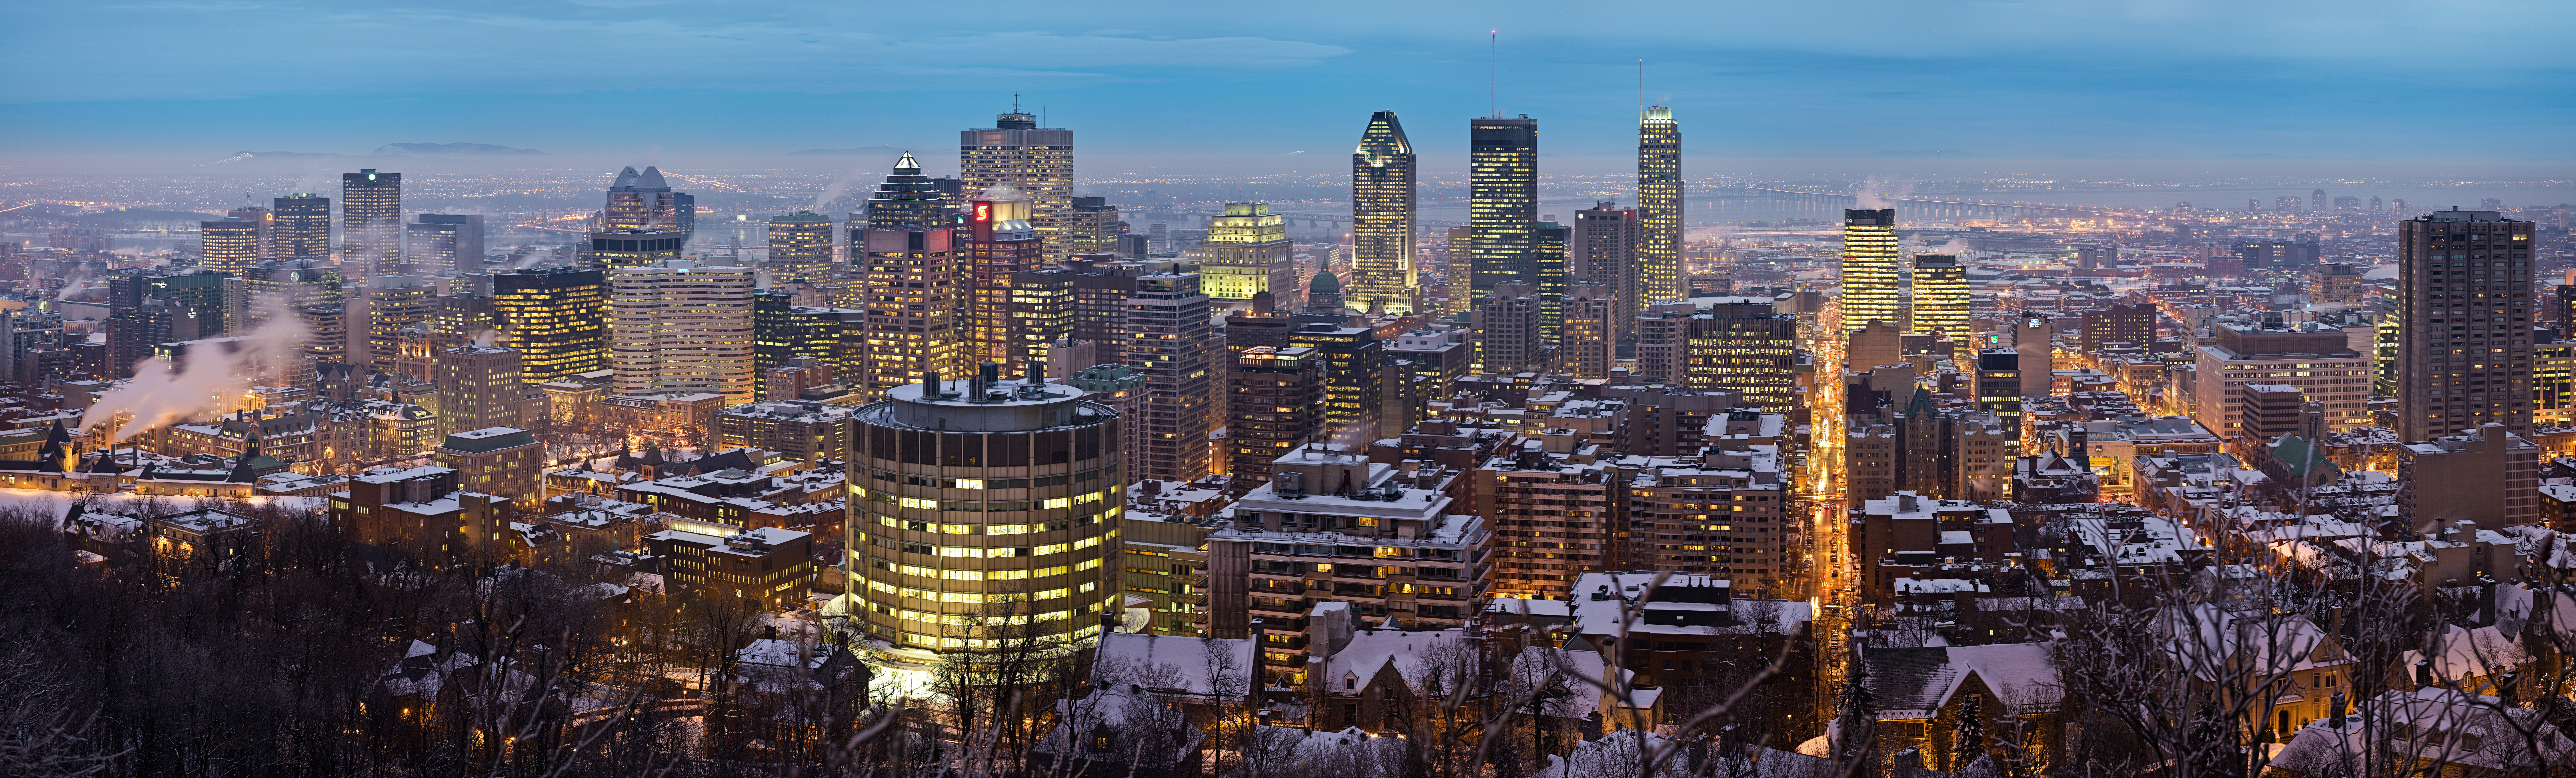 Montreal Twilight Panorama by David Iliff